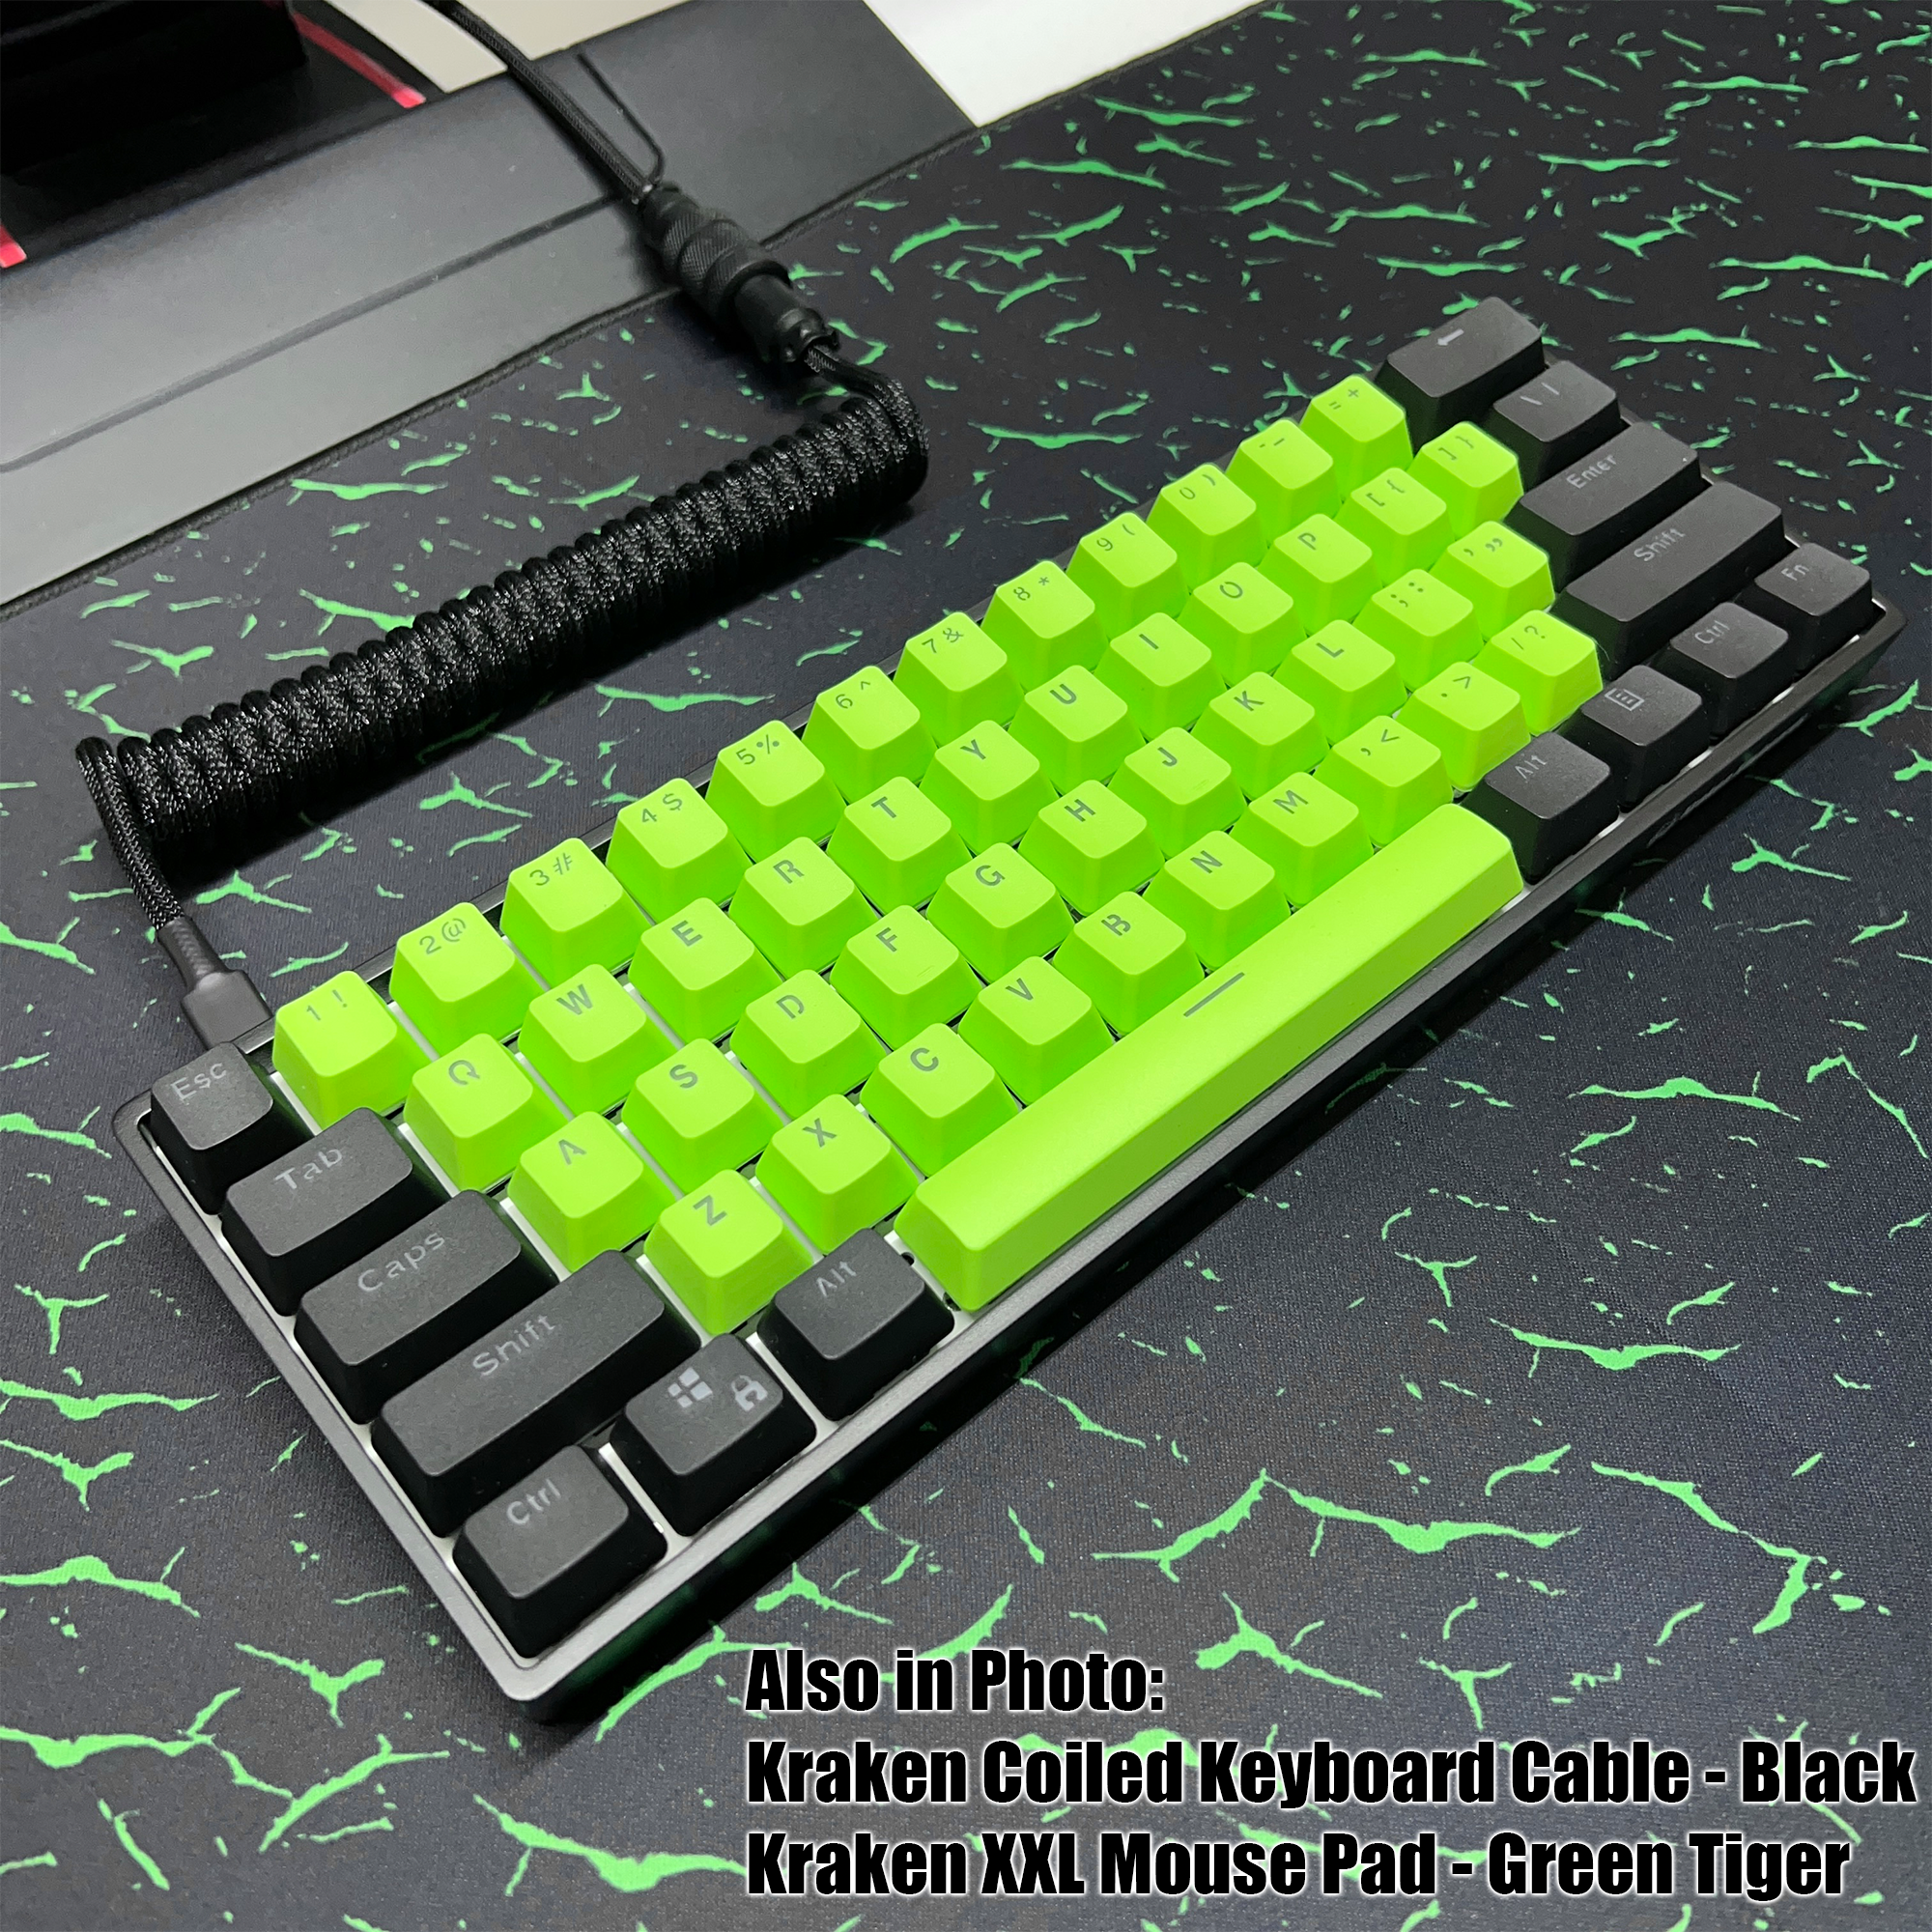 CANDY PAINT Edition, Kraken Pro 60% Mechanical Keyboard